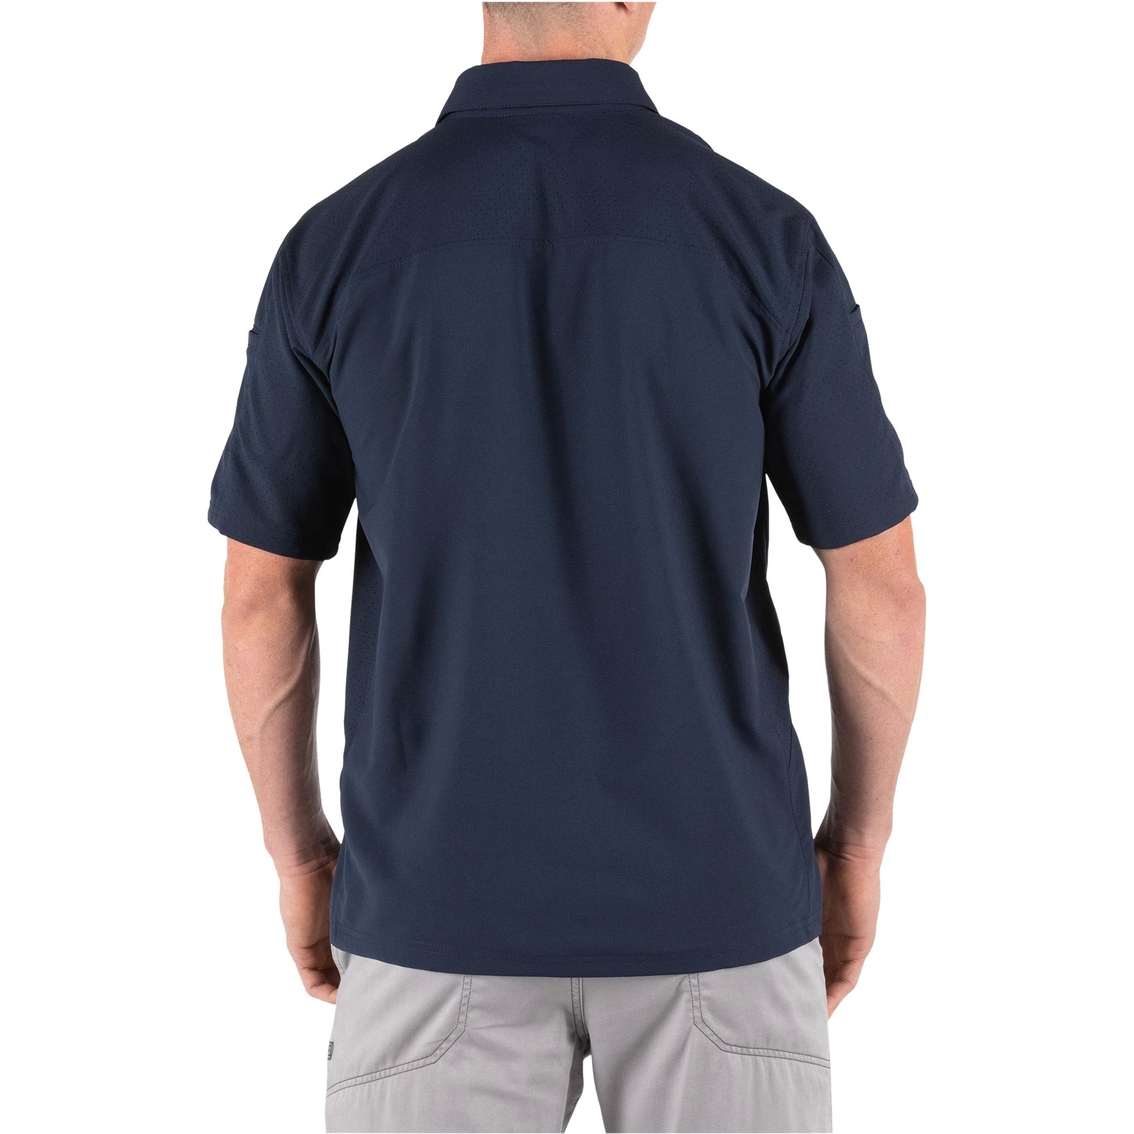 5.11 Freedom Flex Woven Shirt - Image 2 of 3